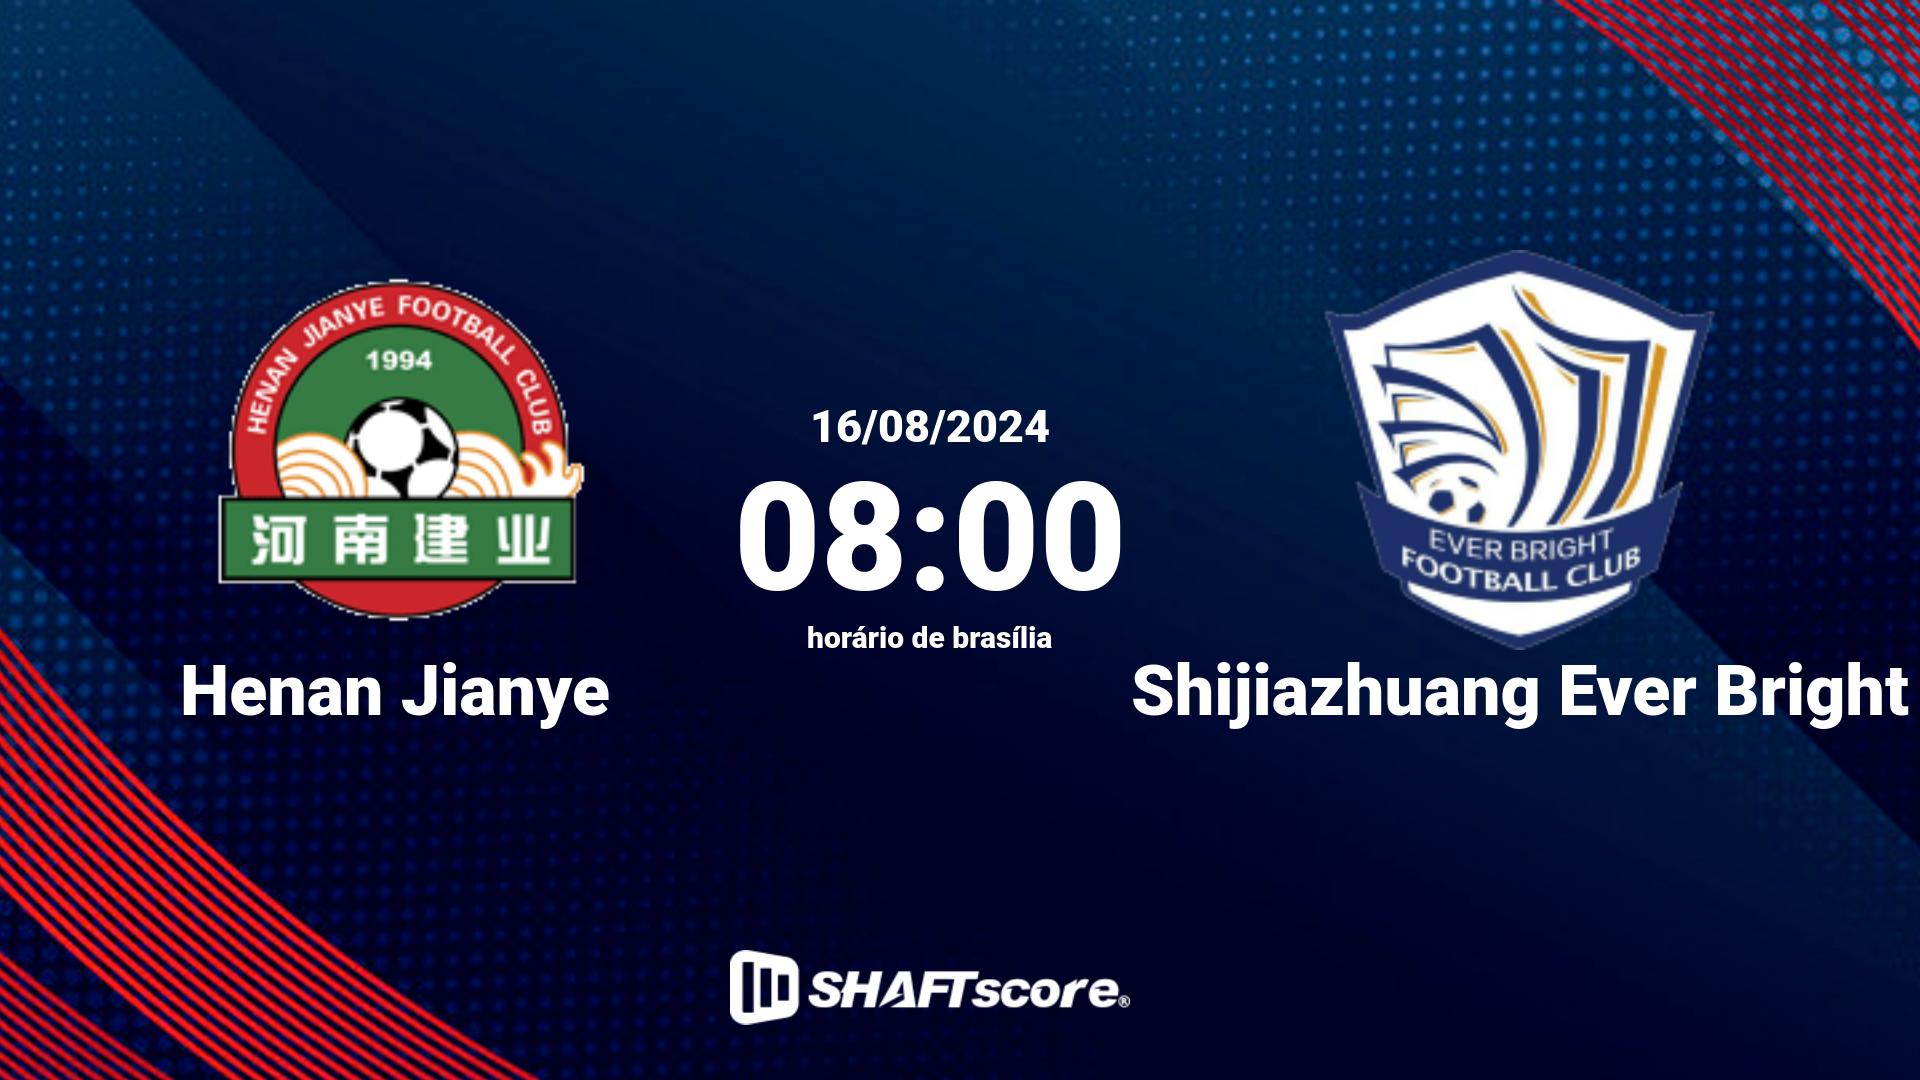 Estatísticas do jogo Henan Jianye vs Shijiazhuang Ever Bright 16.08 08:00